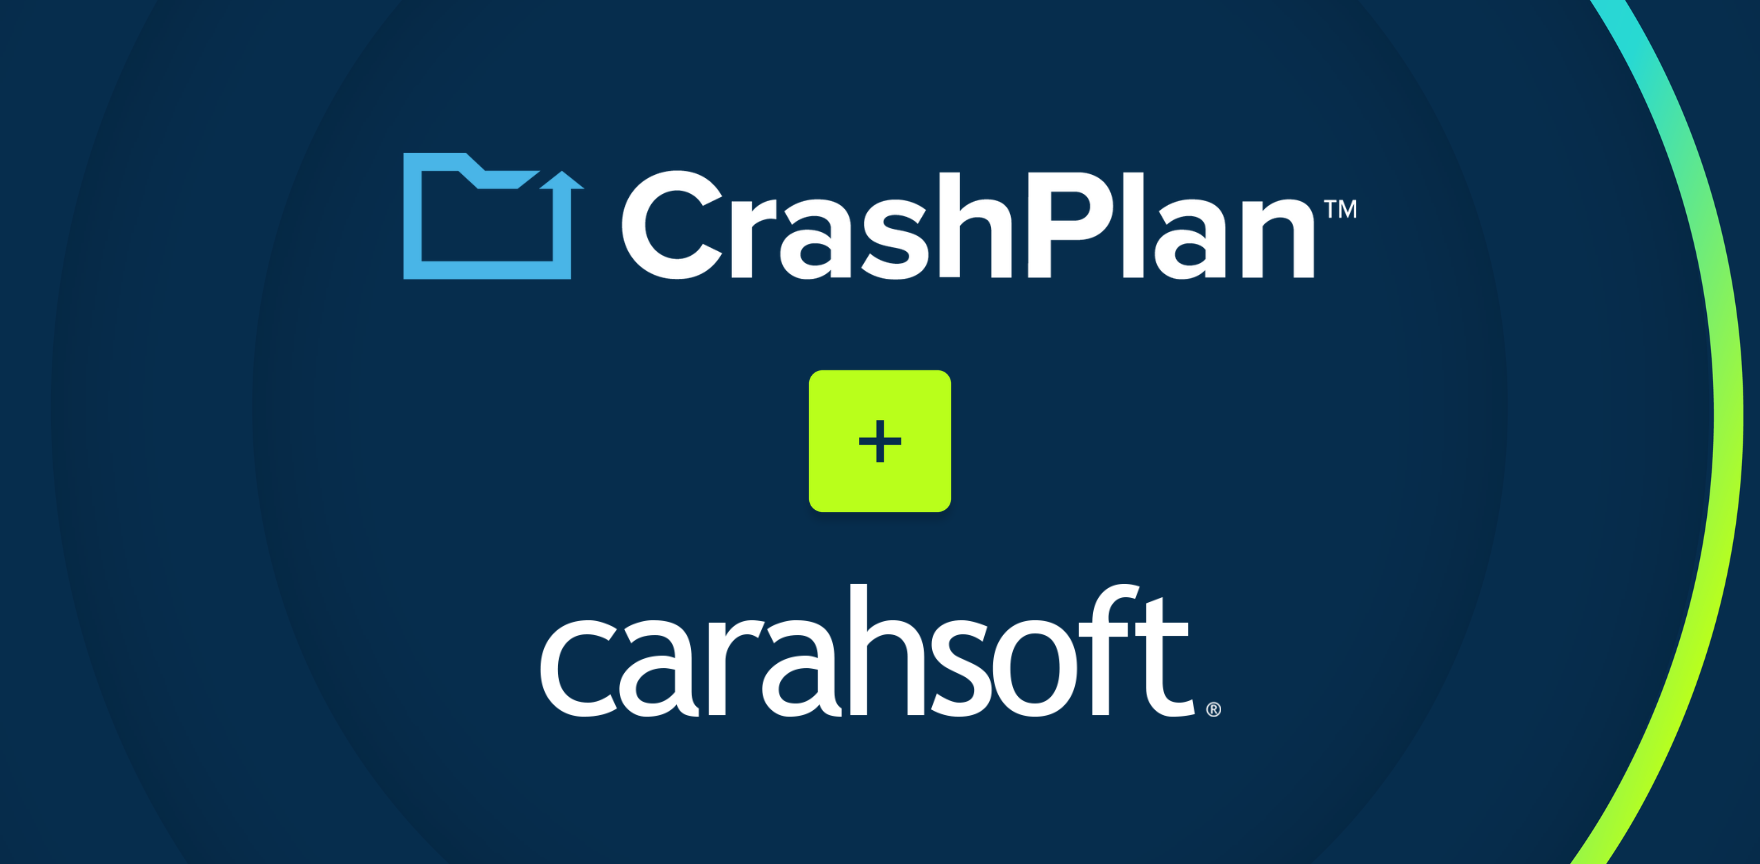 CrashPlan and Carahsoft logos with a plus sign on a blue background, symbolizing their partnership.